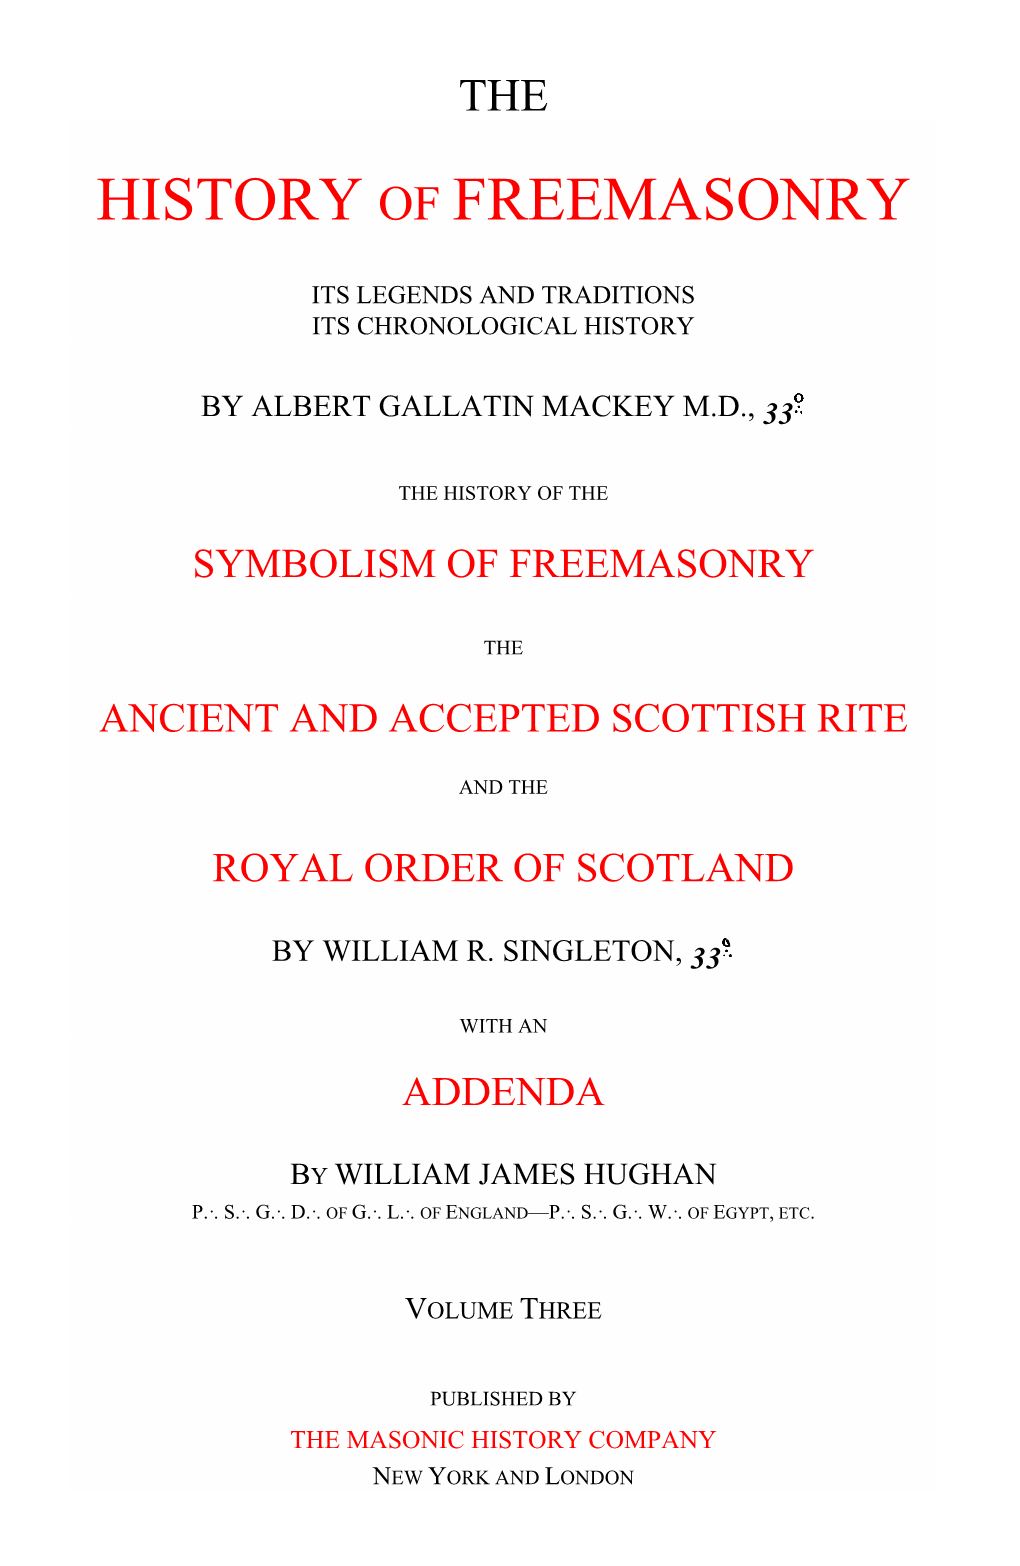 The History of Freemasonry, Volume III, 1906